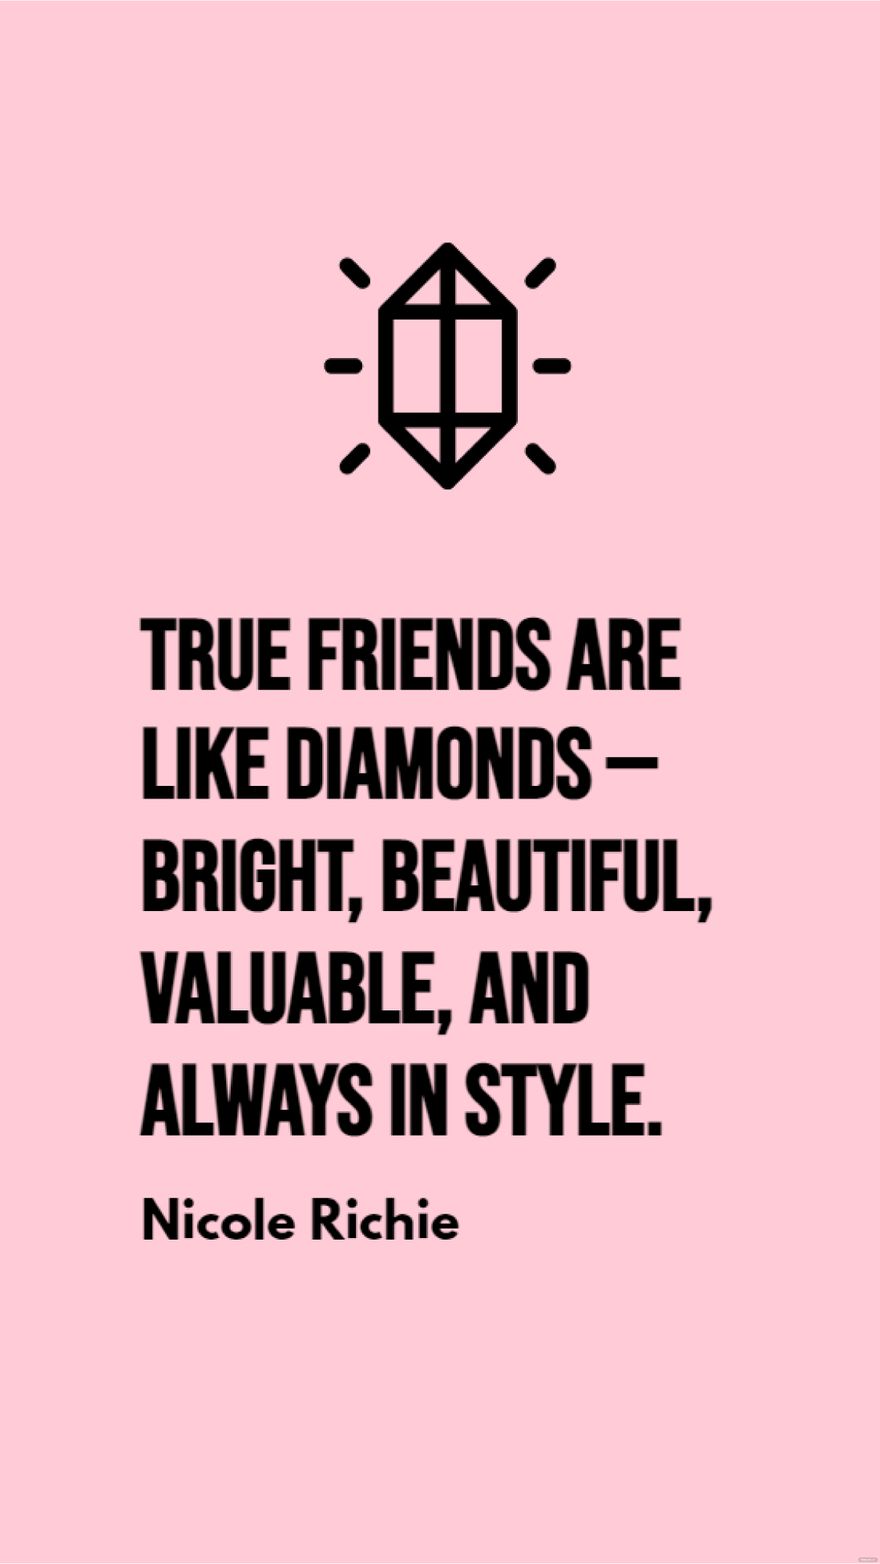 true friendship quotes images